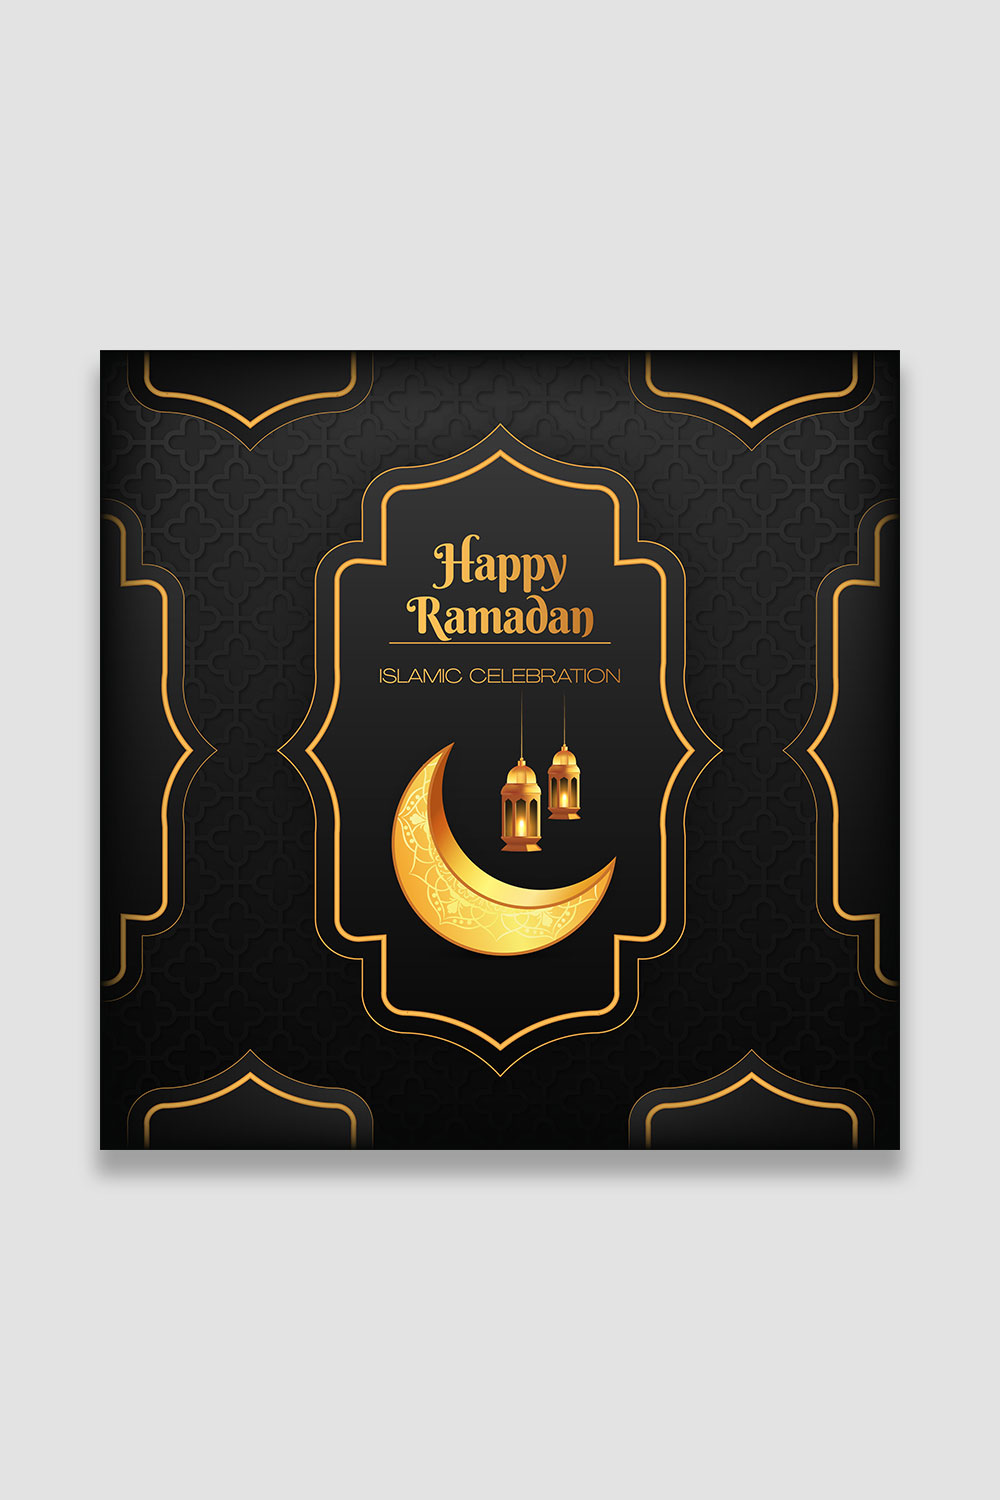 Ramadan Kareem greeting card design with Islamic background pinterest preview image.